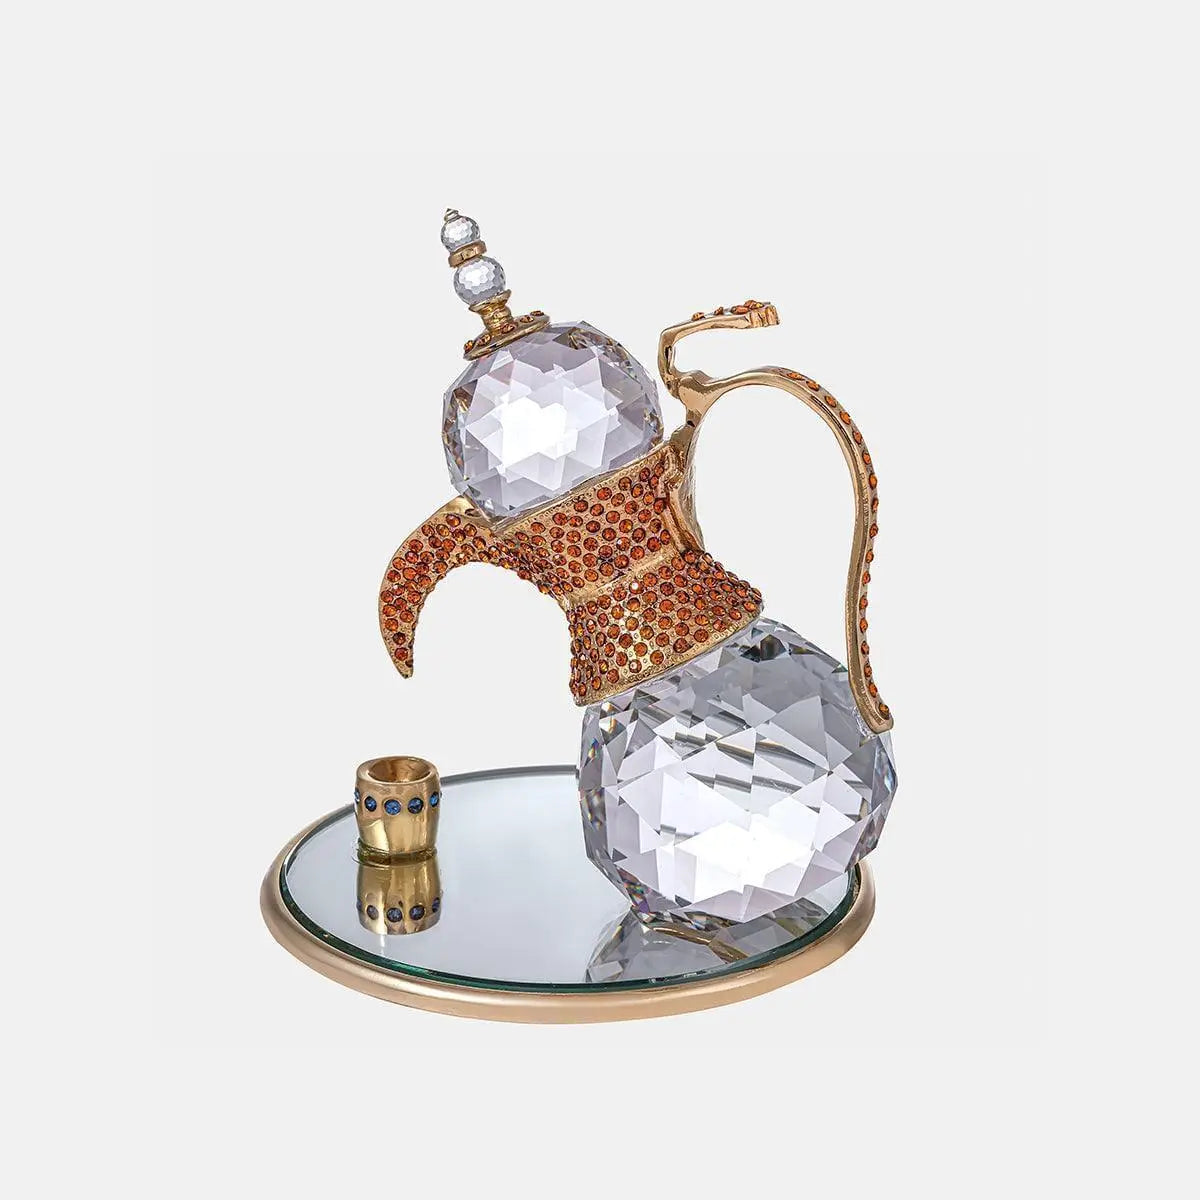 Arabian Coffee Jug Gift Crystal Asfour